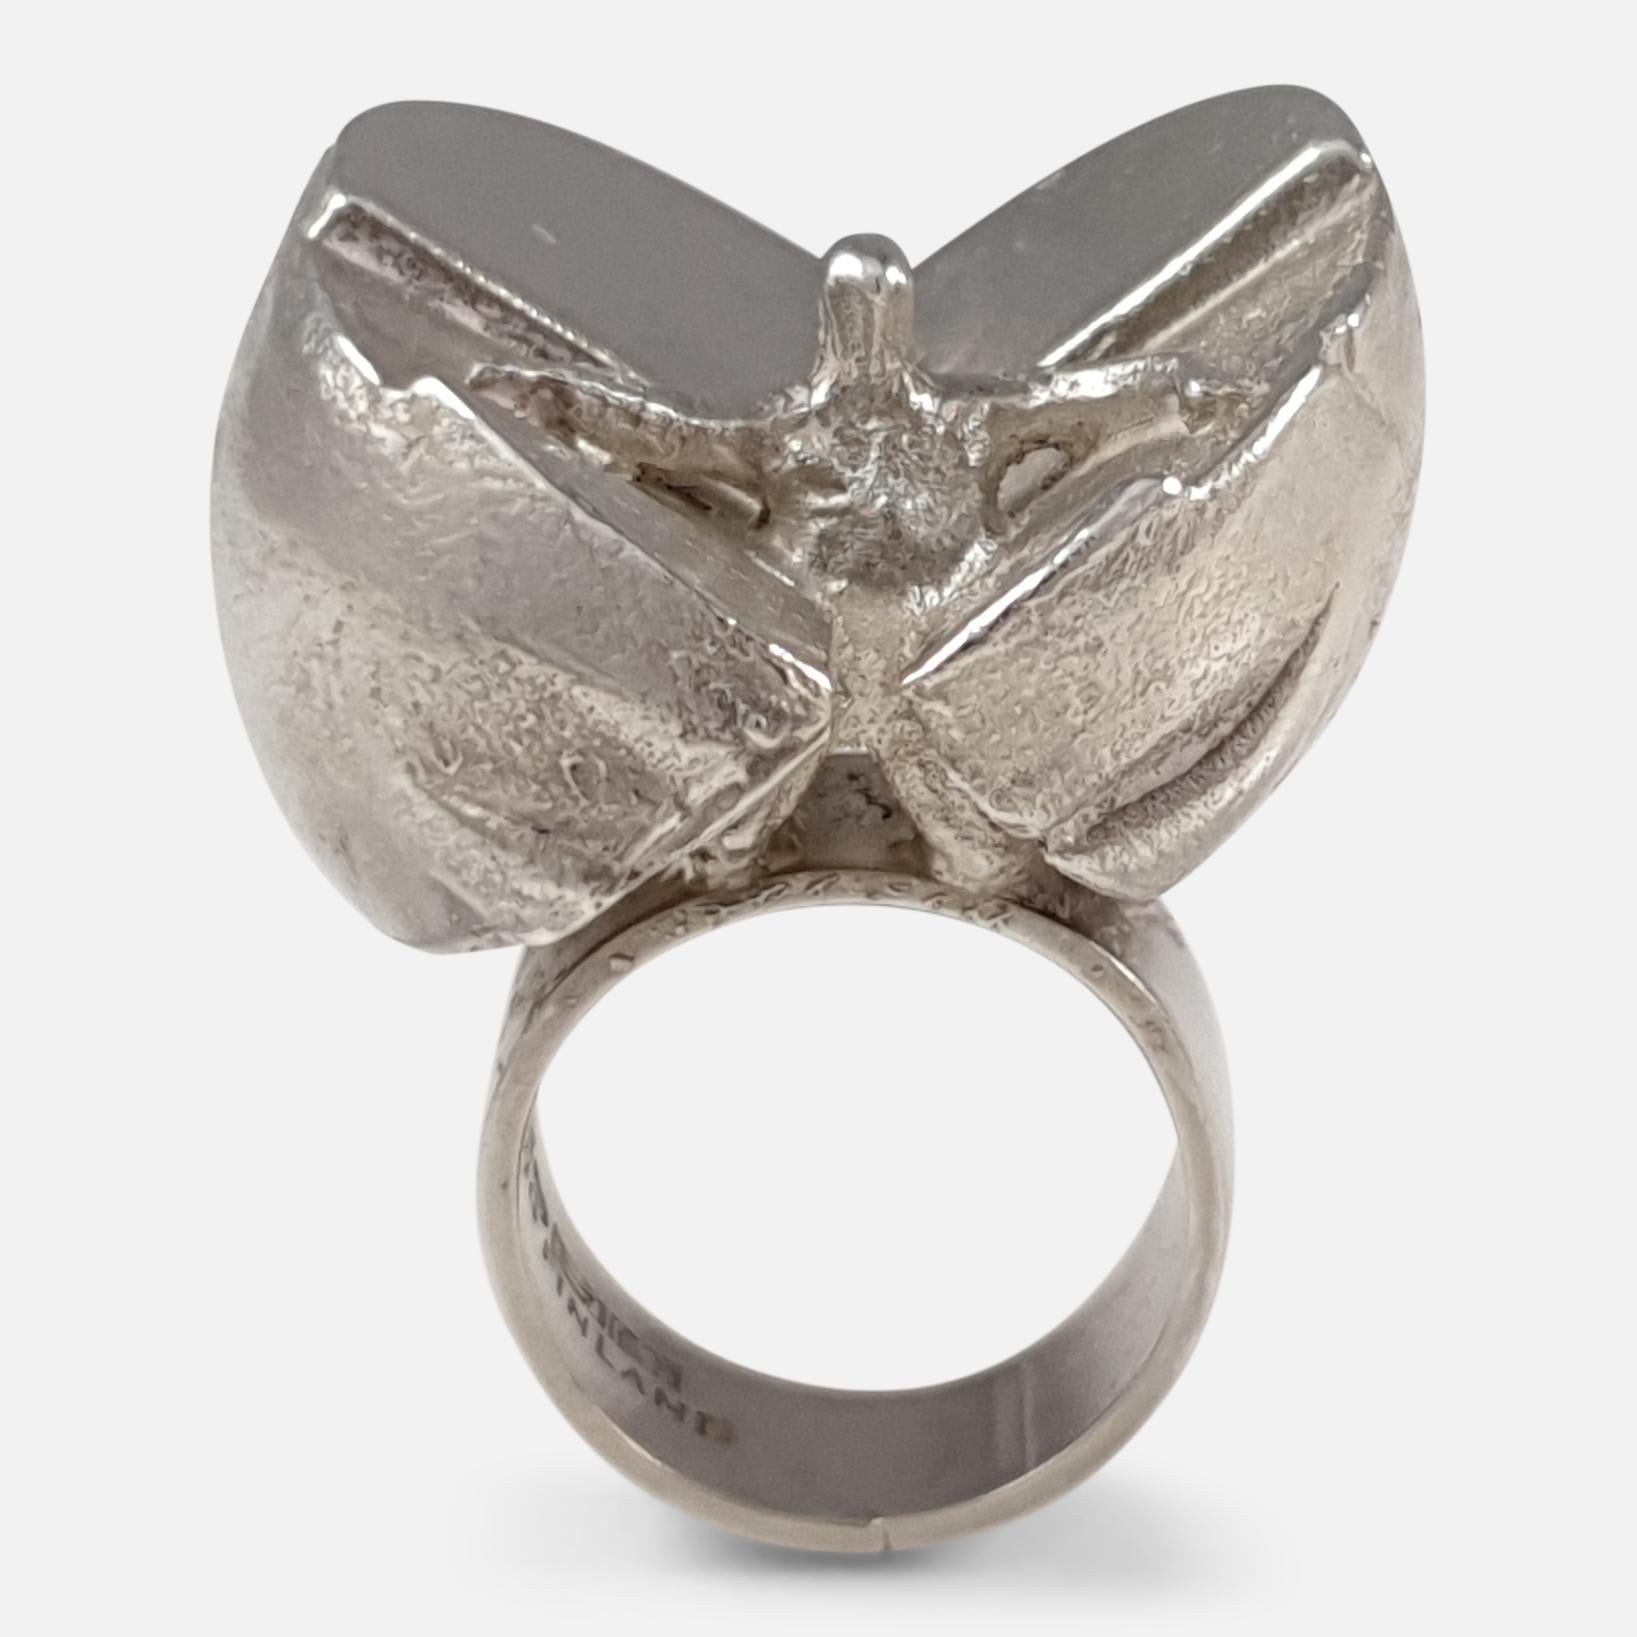 Item: - A superb Finnish sterling silver modernist 